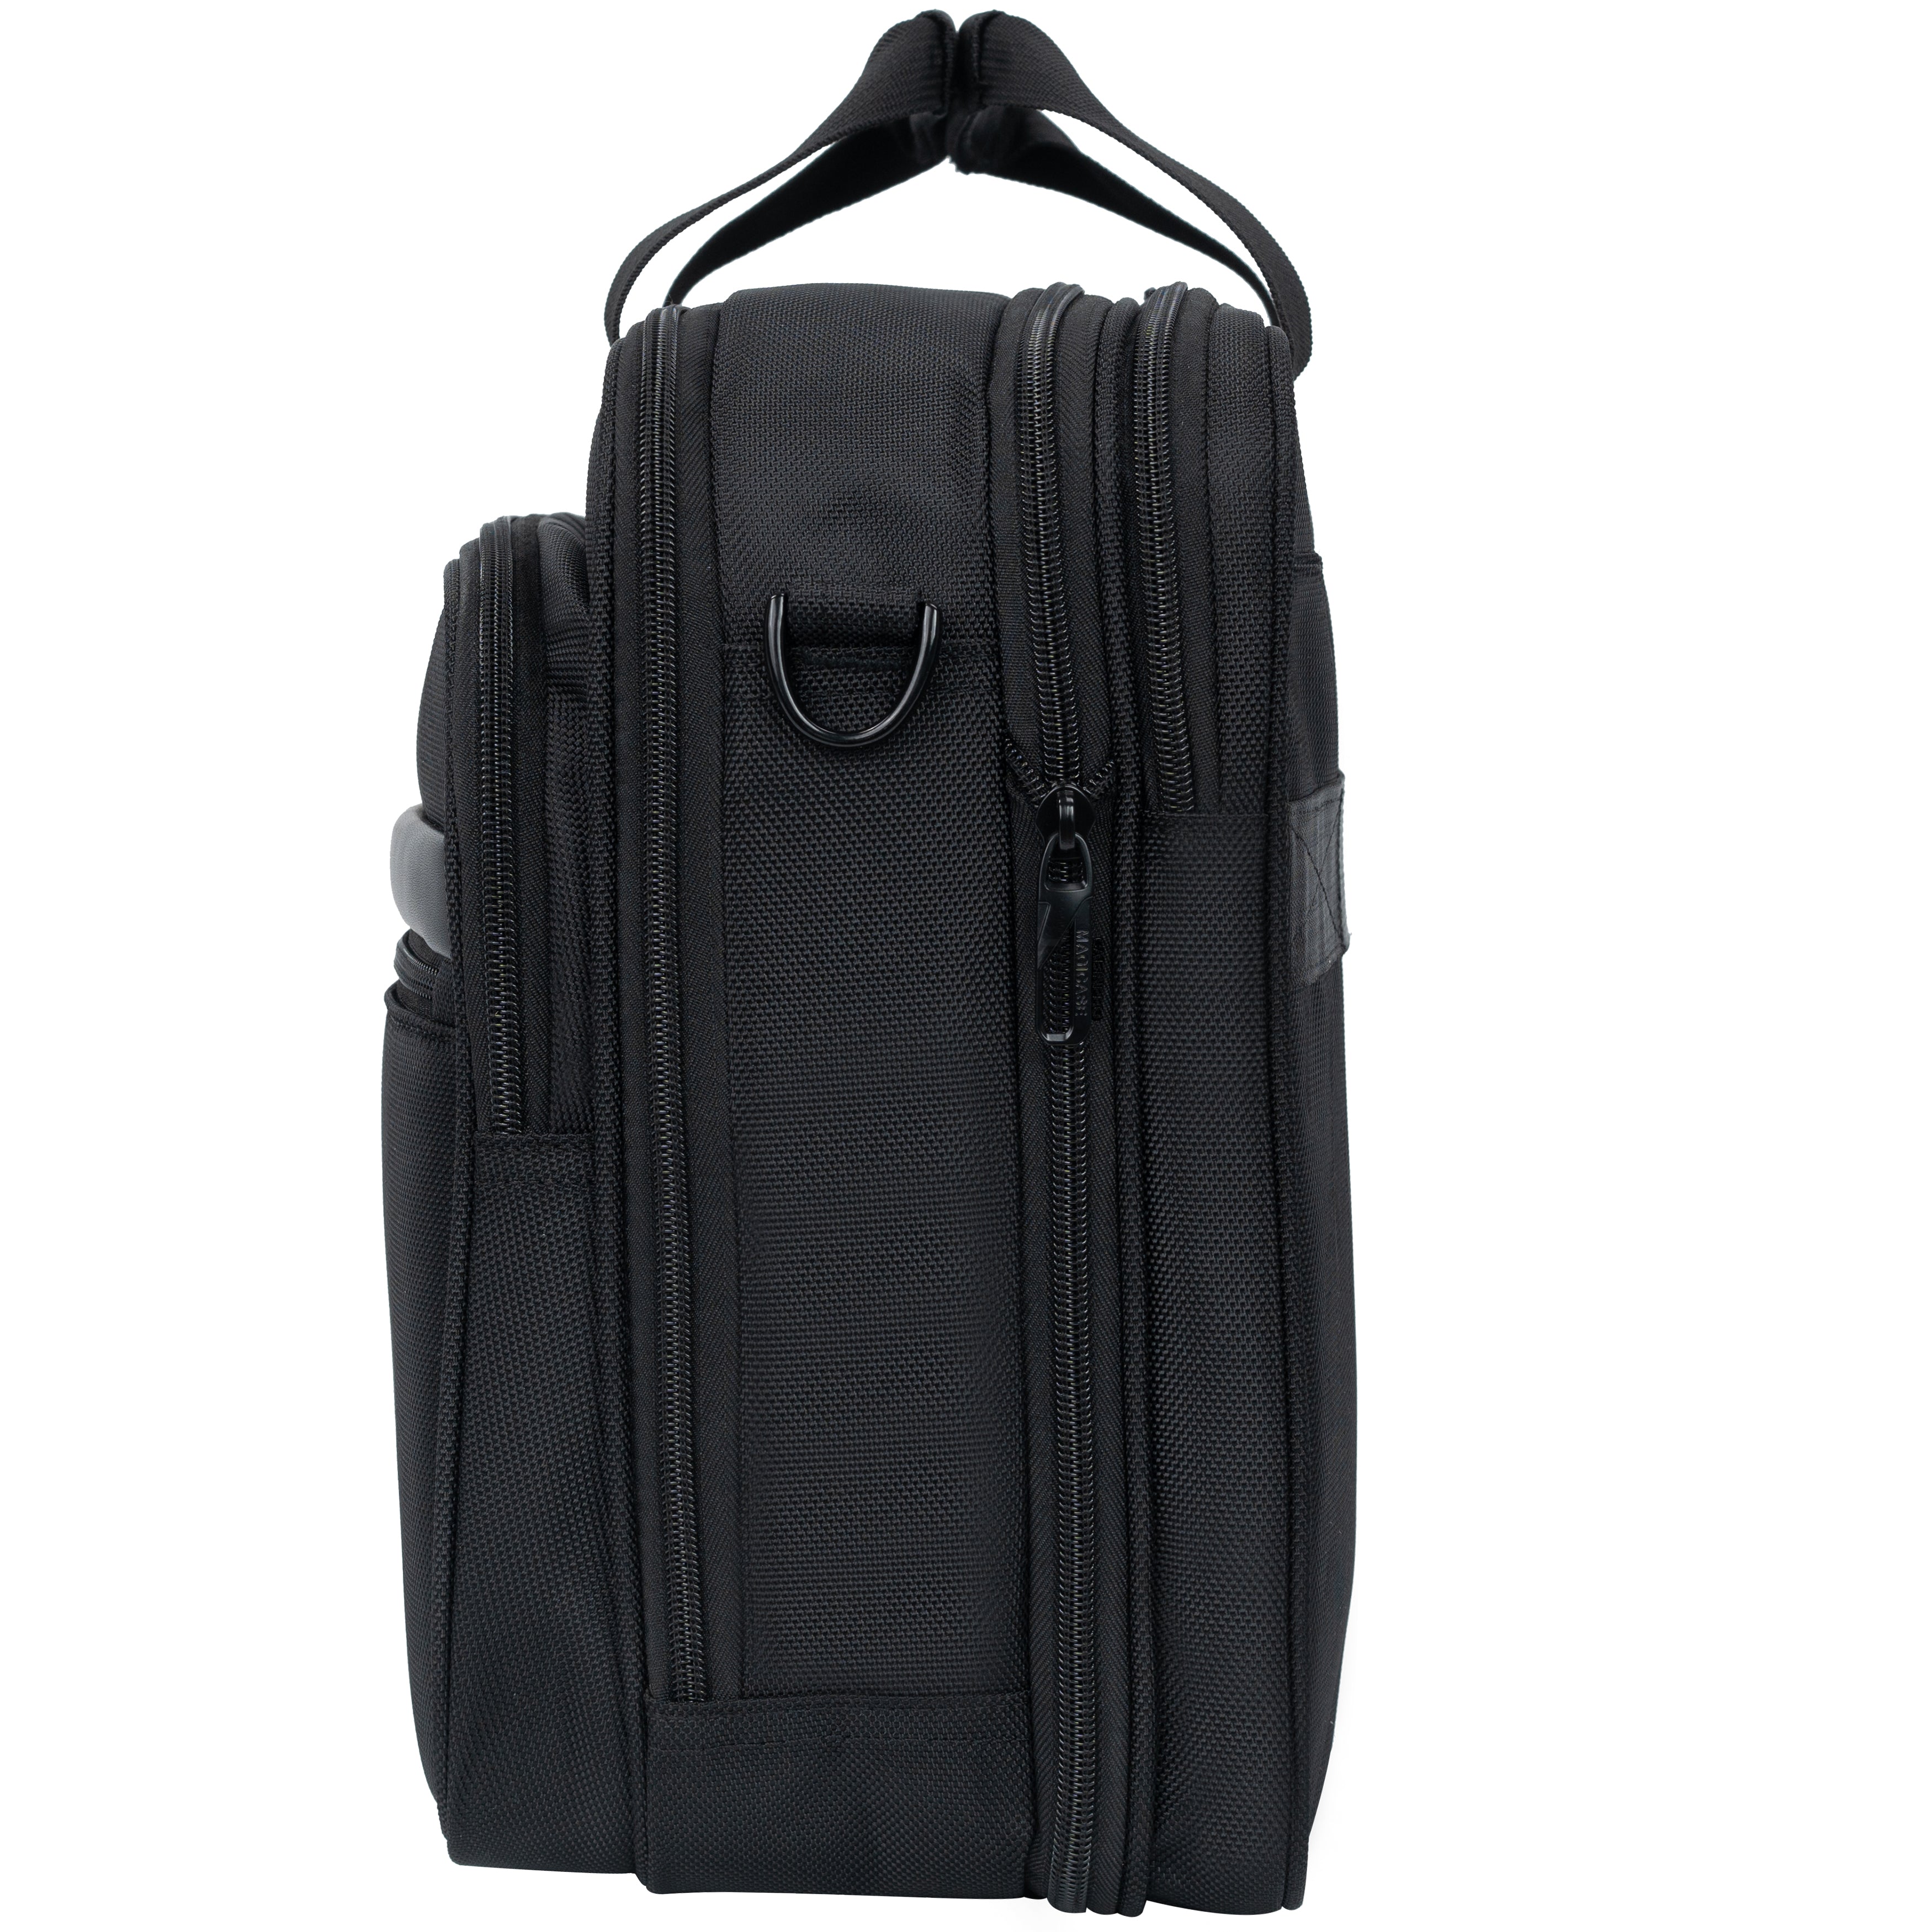 Cabinpro Premium Laptop Briefcase Bag Water Resistant Expandable Unisex Shoulder Business Bag with Adjustable Shoulder Strap for Men and Women, CP011